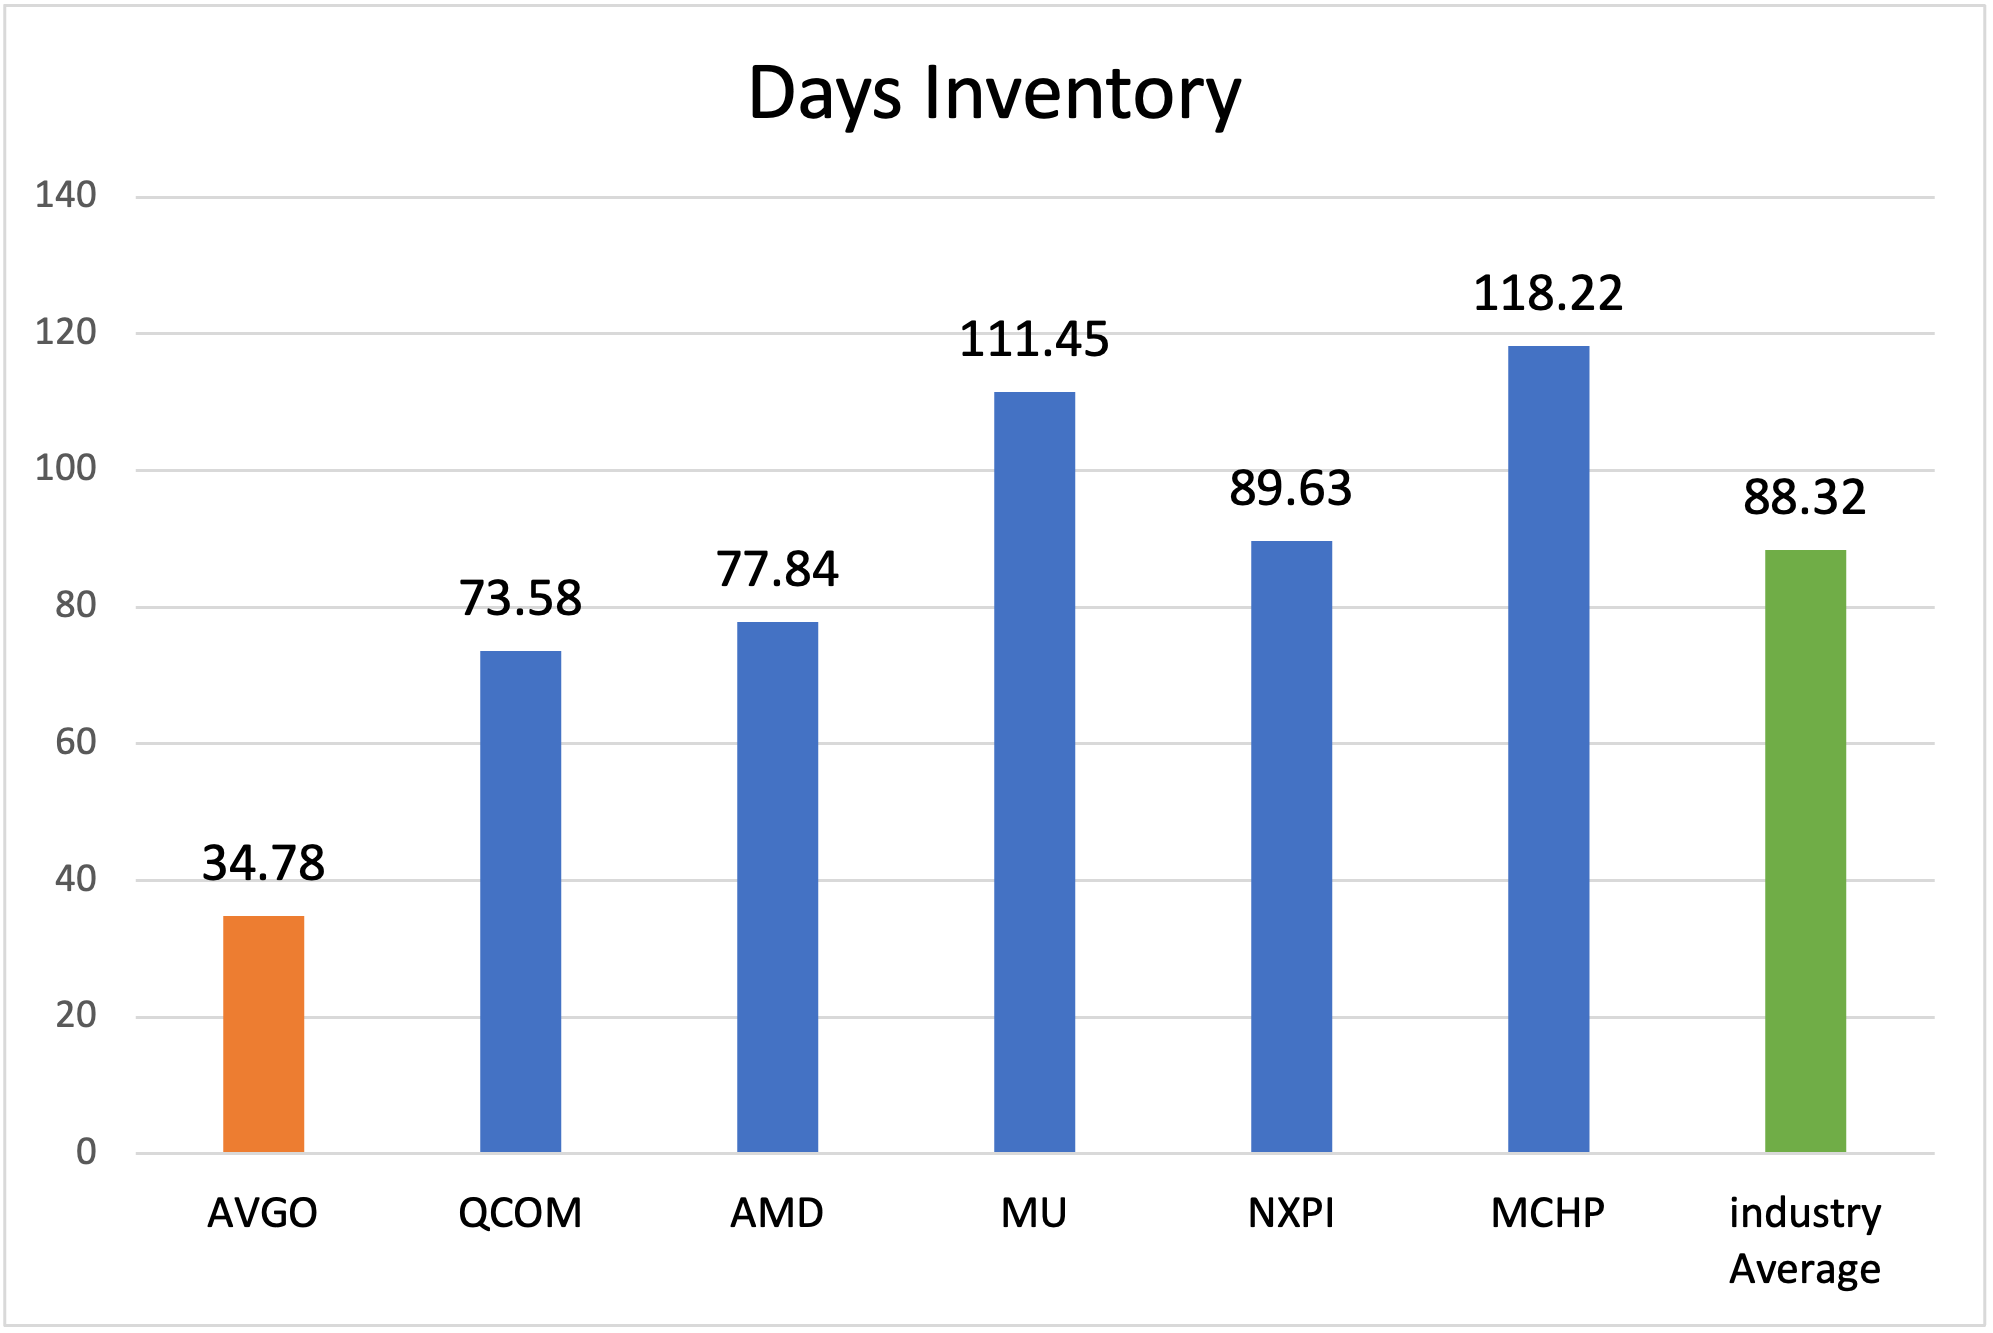 AVGO Days Inventory